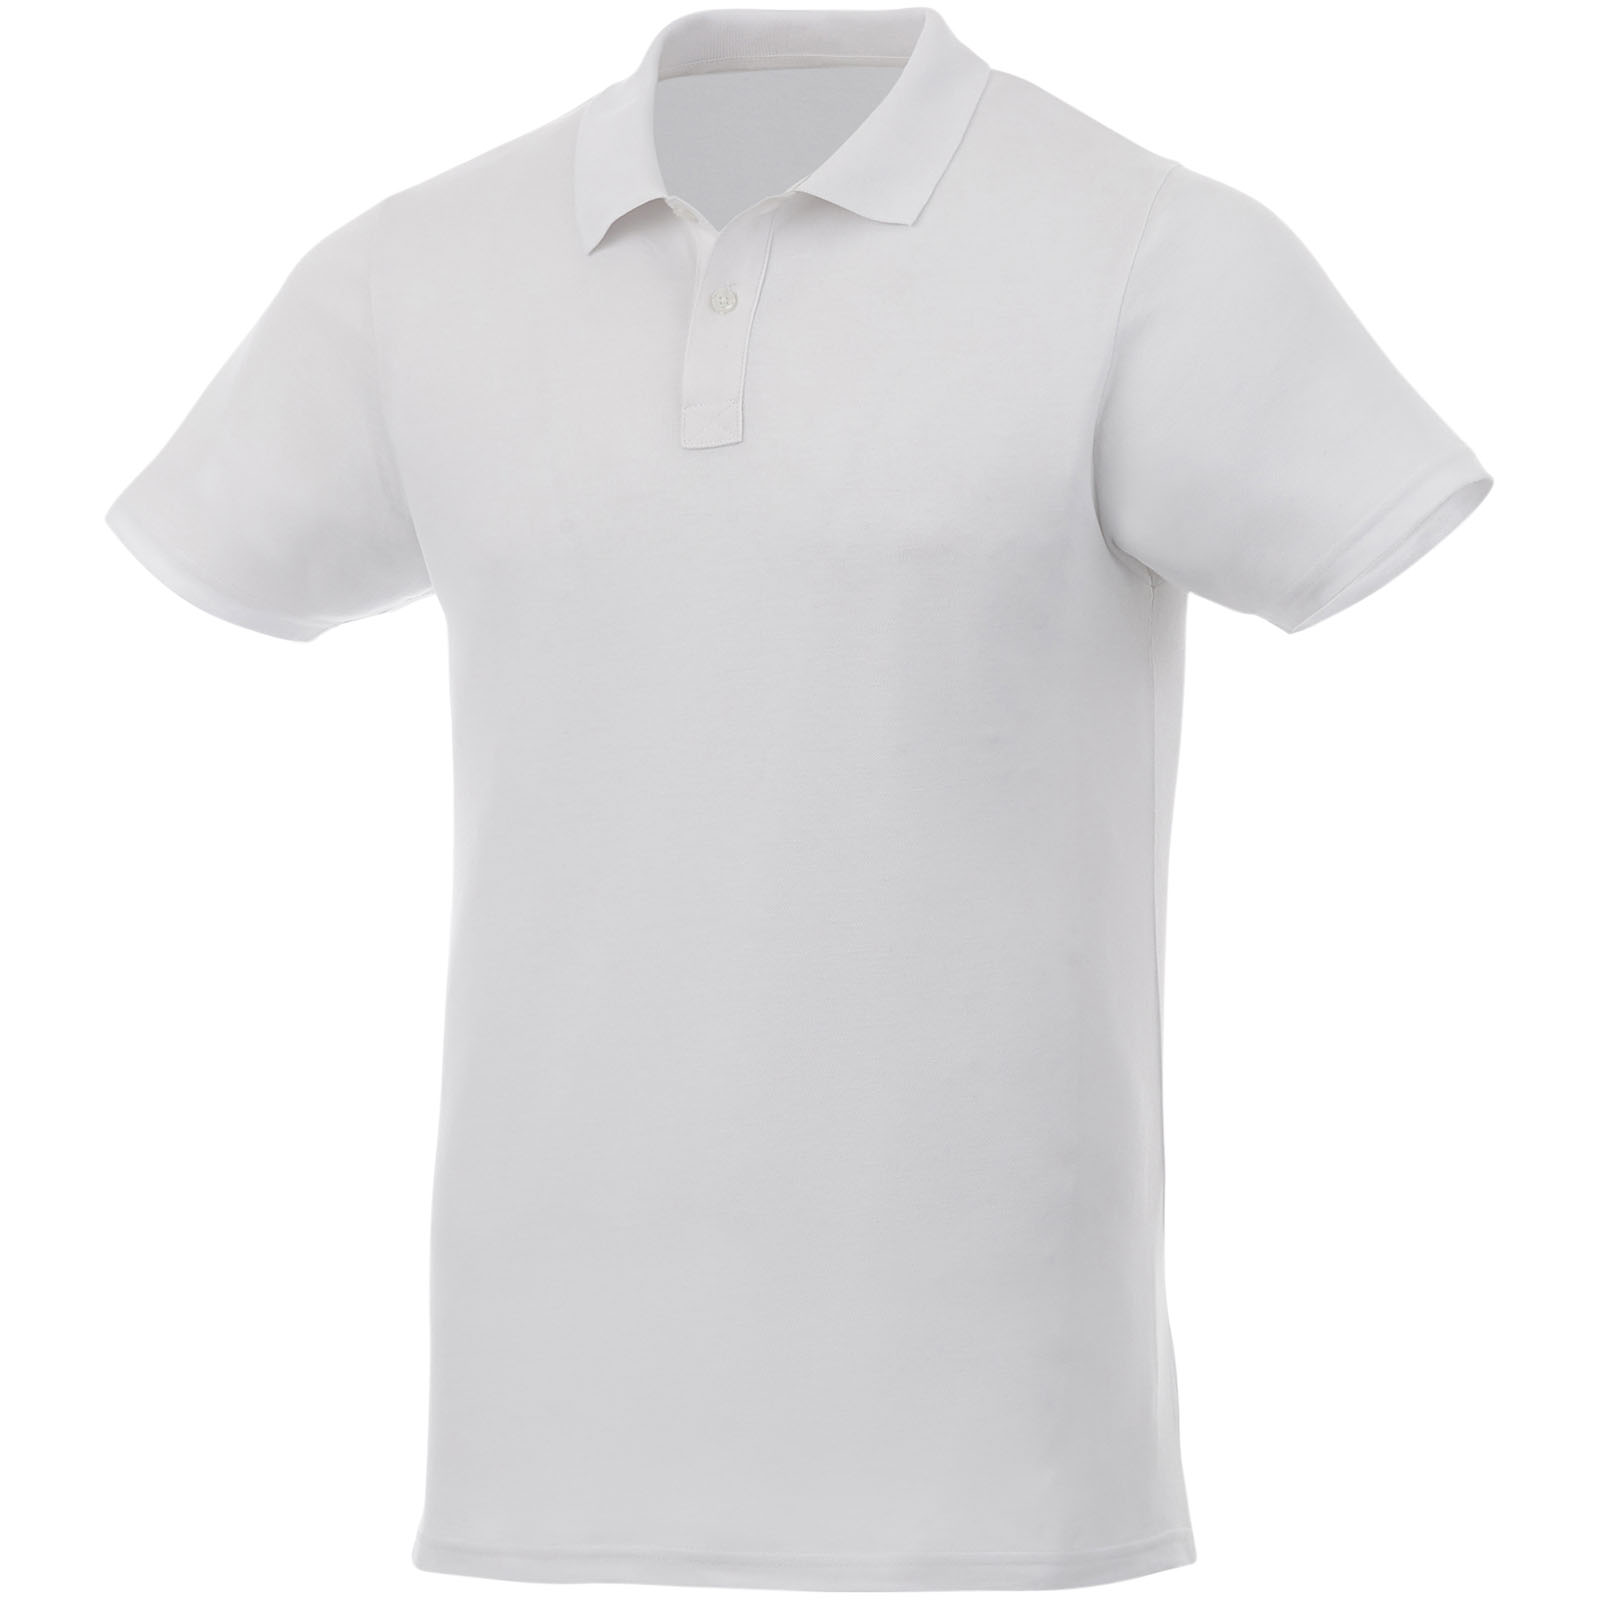 Camiseta Polo con Etiqueta Personalizada - Shipton Under Wychwood - Castejón de Valdejasa